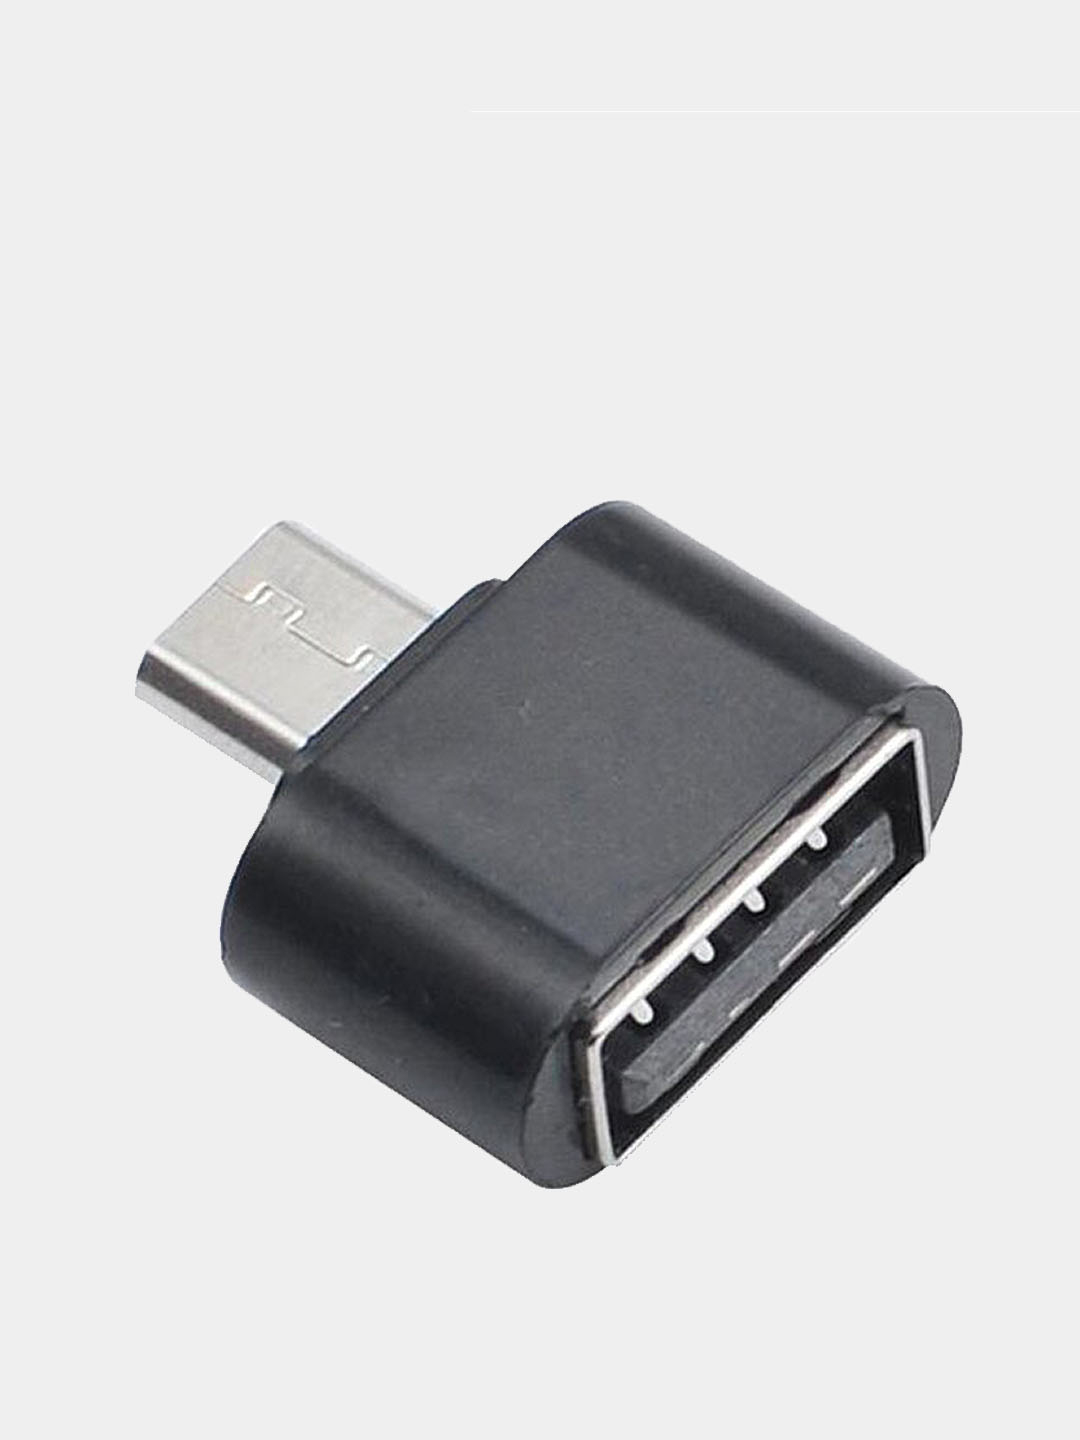 Адаптер переходник OTG USB microB 5pin/AF